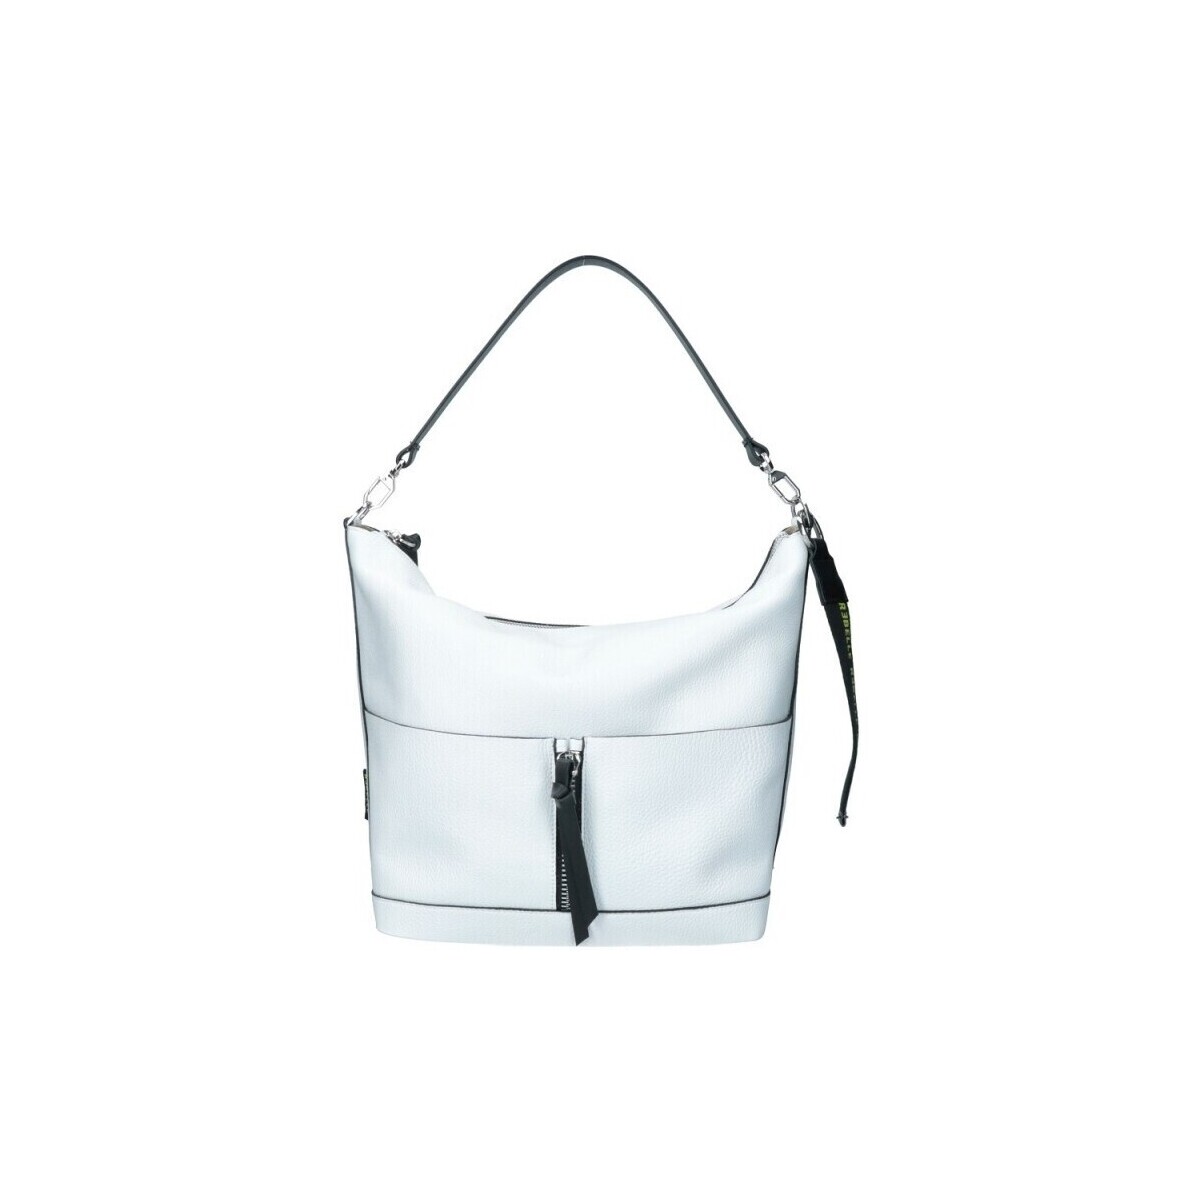 Borse Donna Borse Rebelle a519 eirene-bucket-l white Bianco